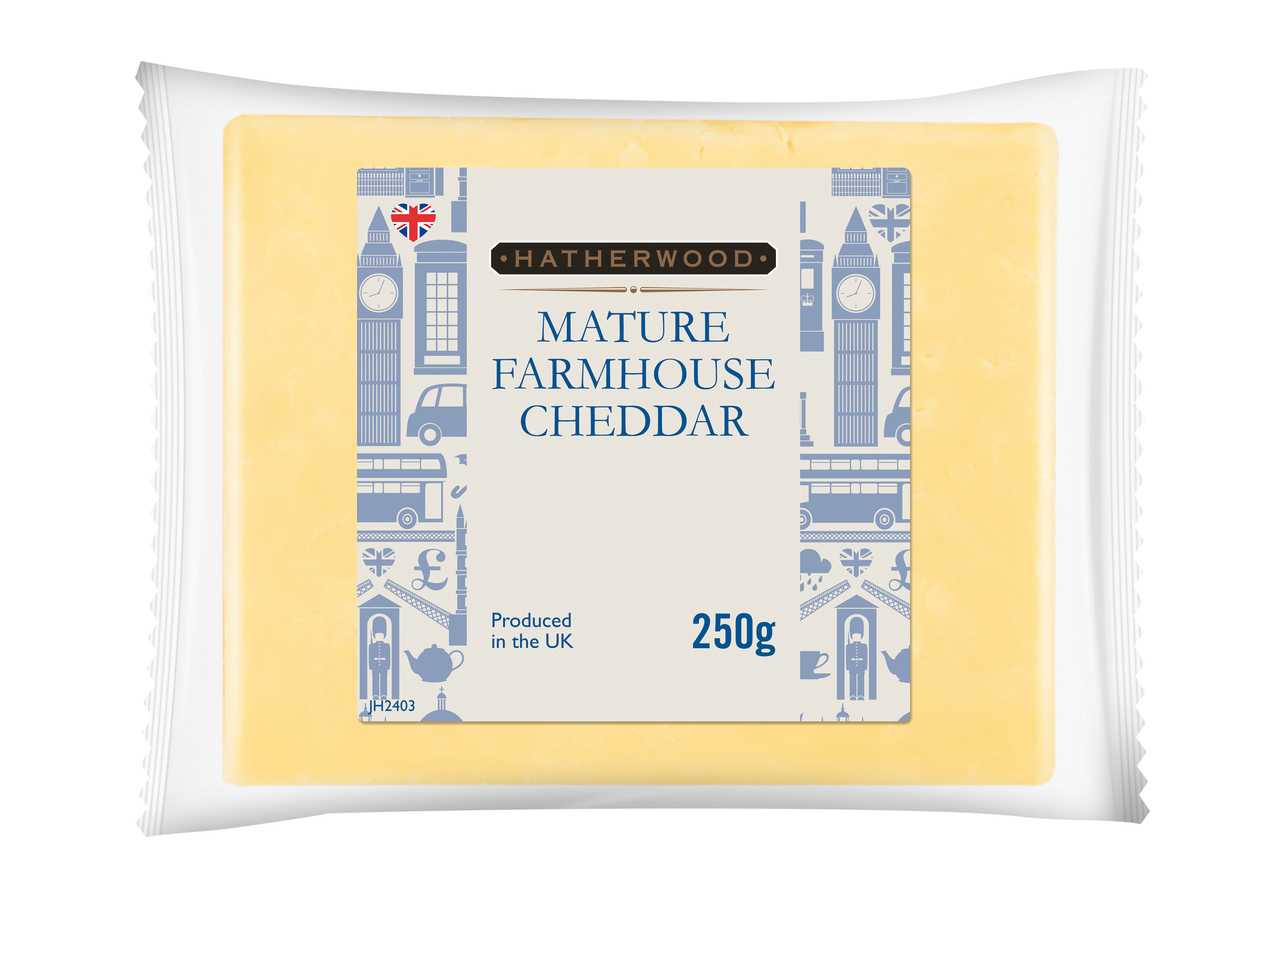 Brânză Cheddar maturată